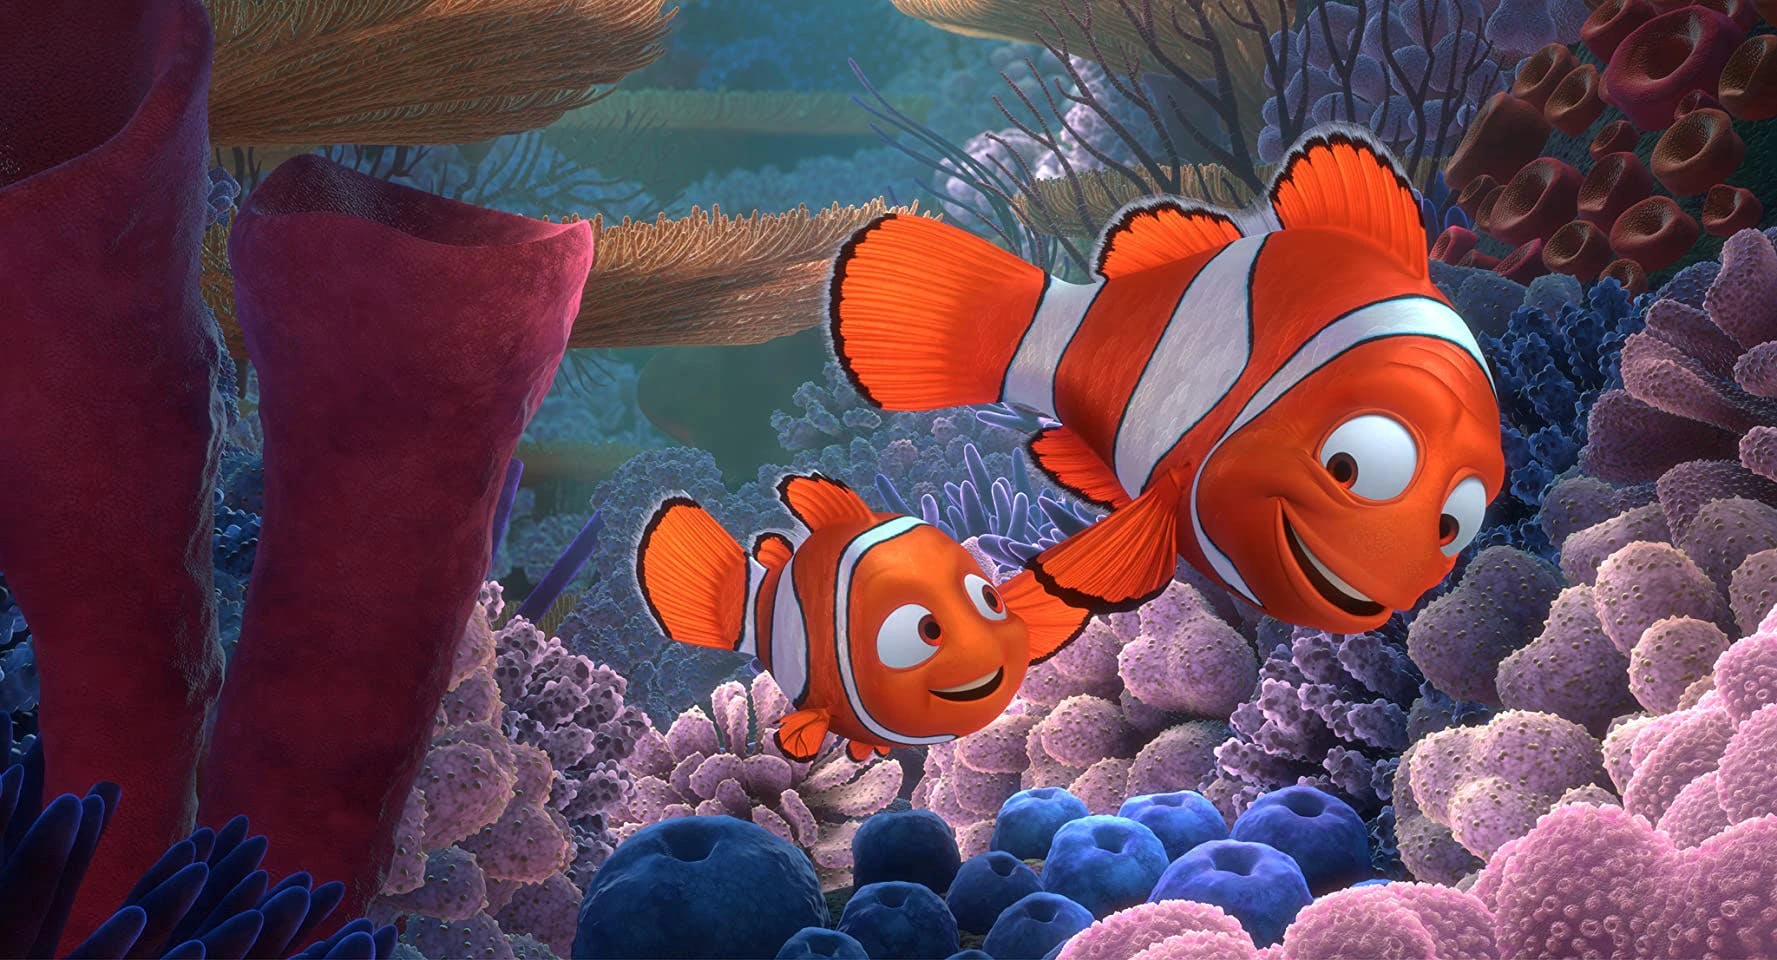 Pixar/Disney/Finding Nemo